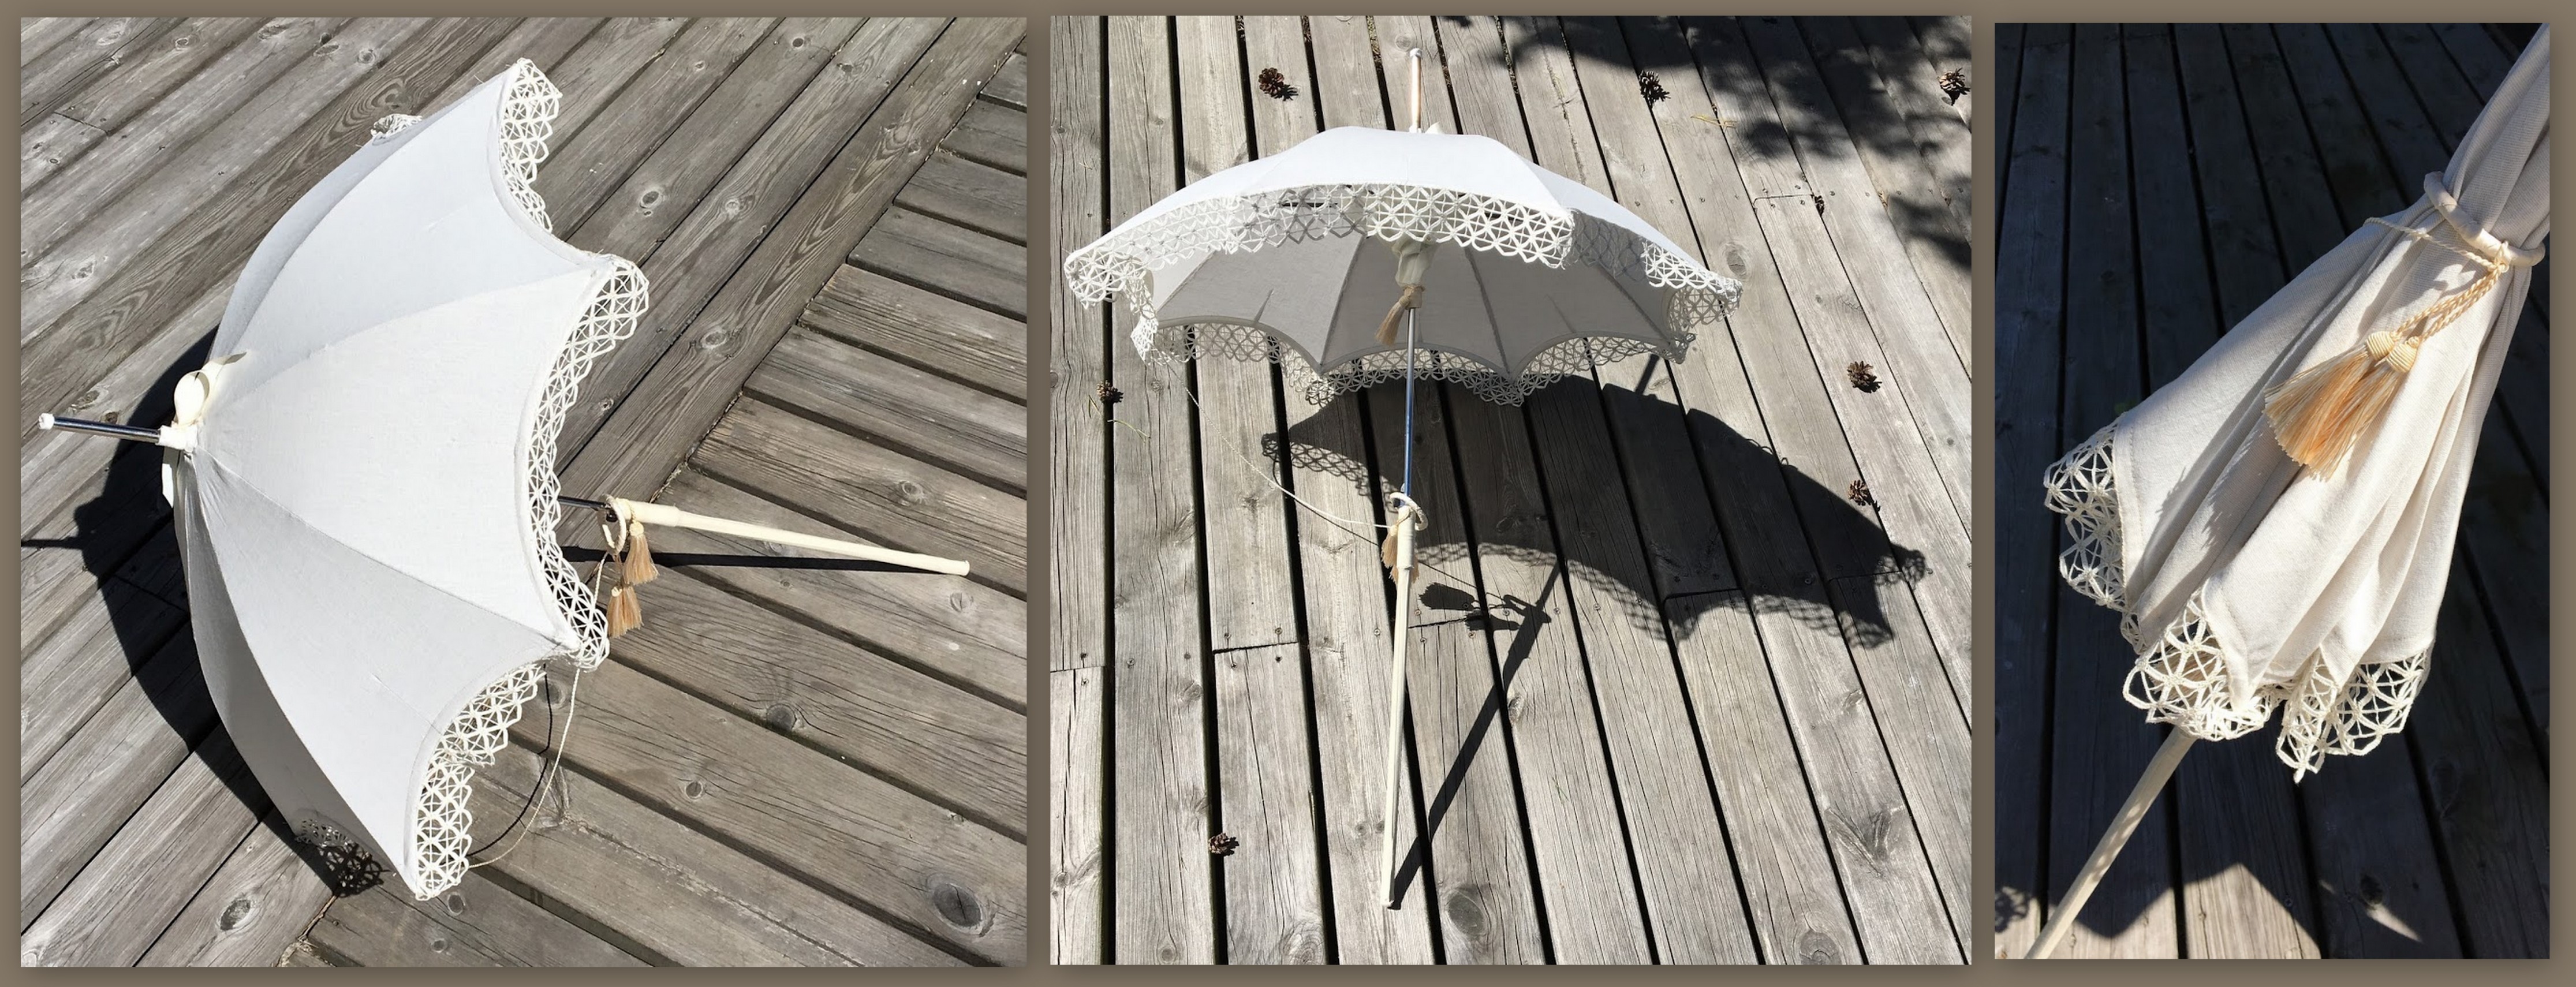 How a parasol - Augusta's